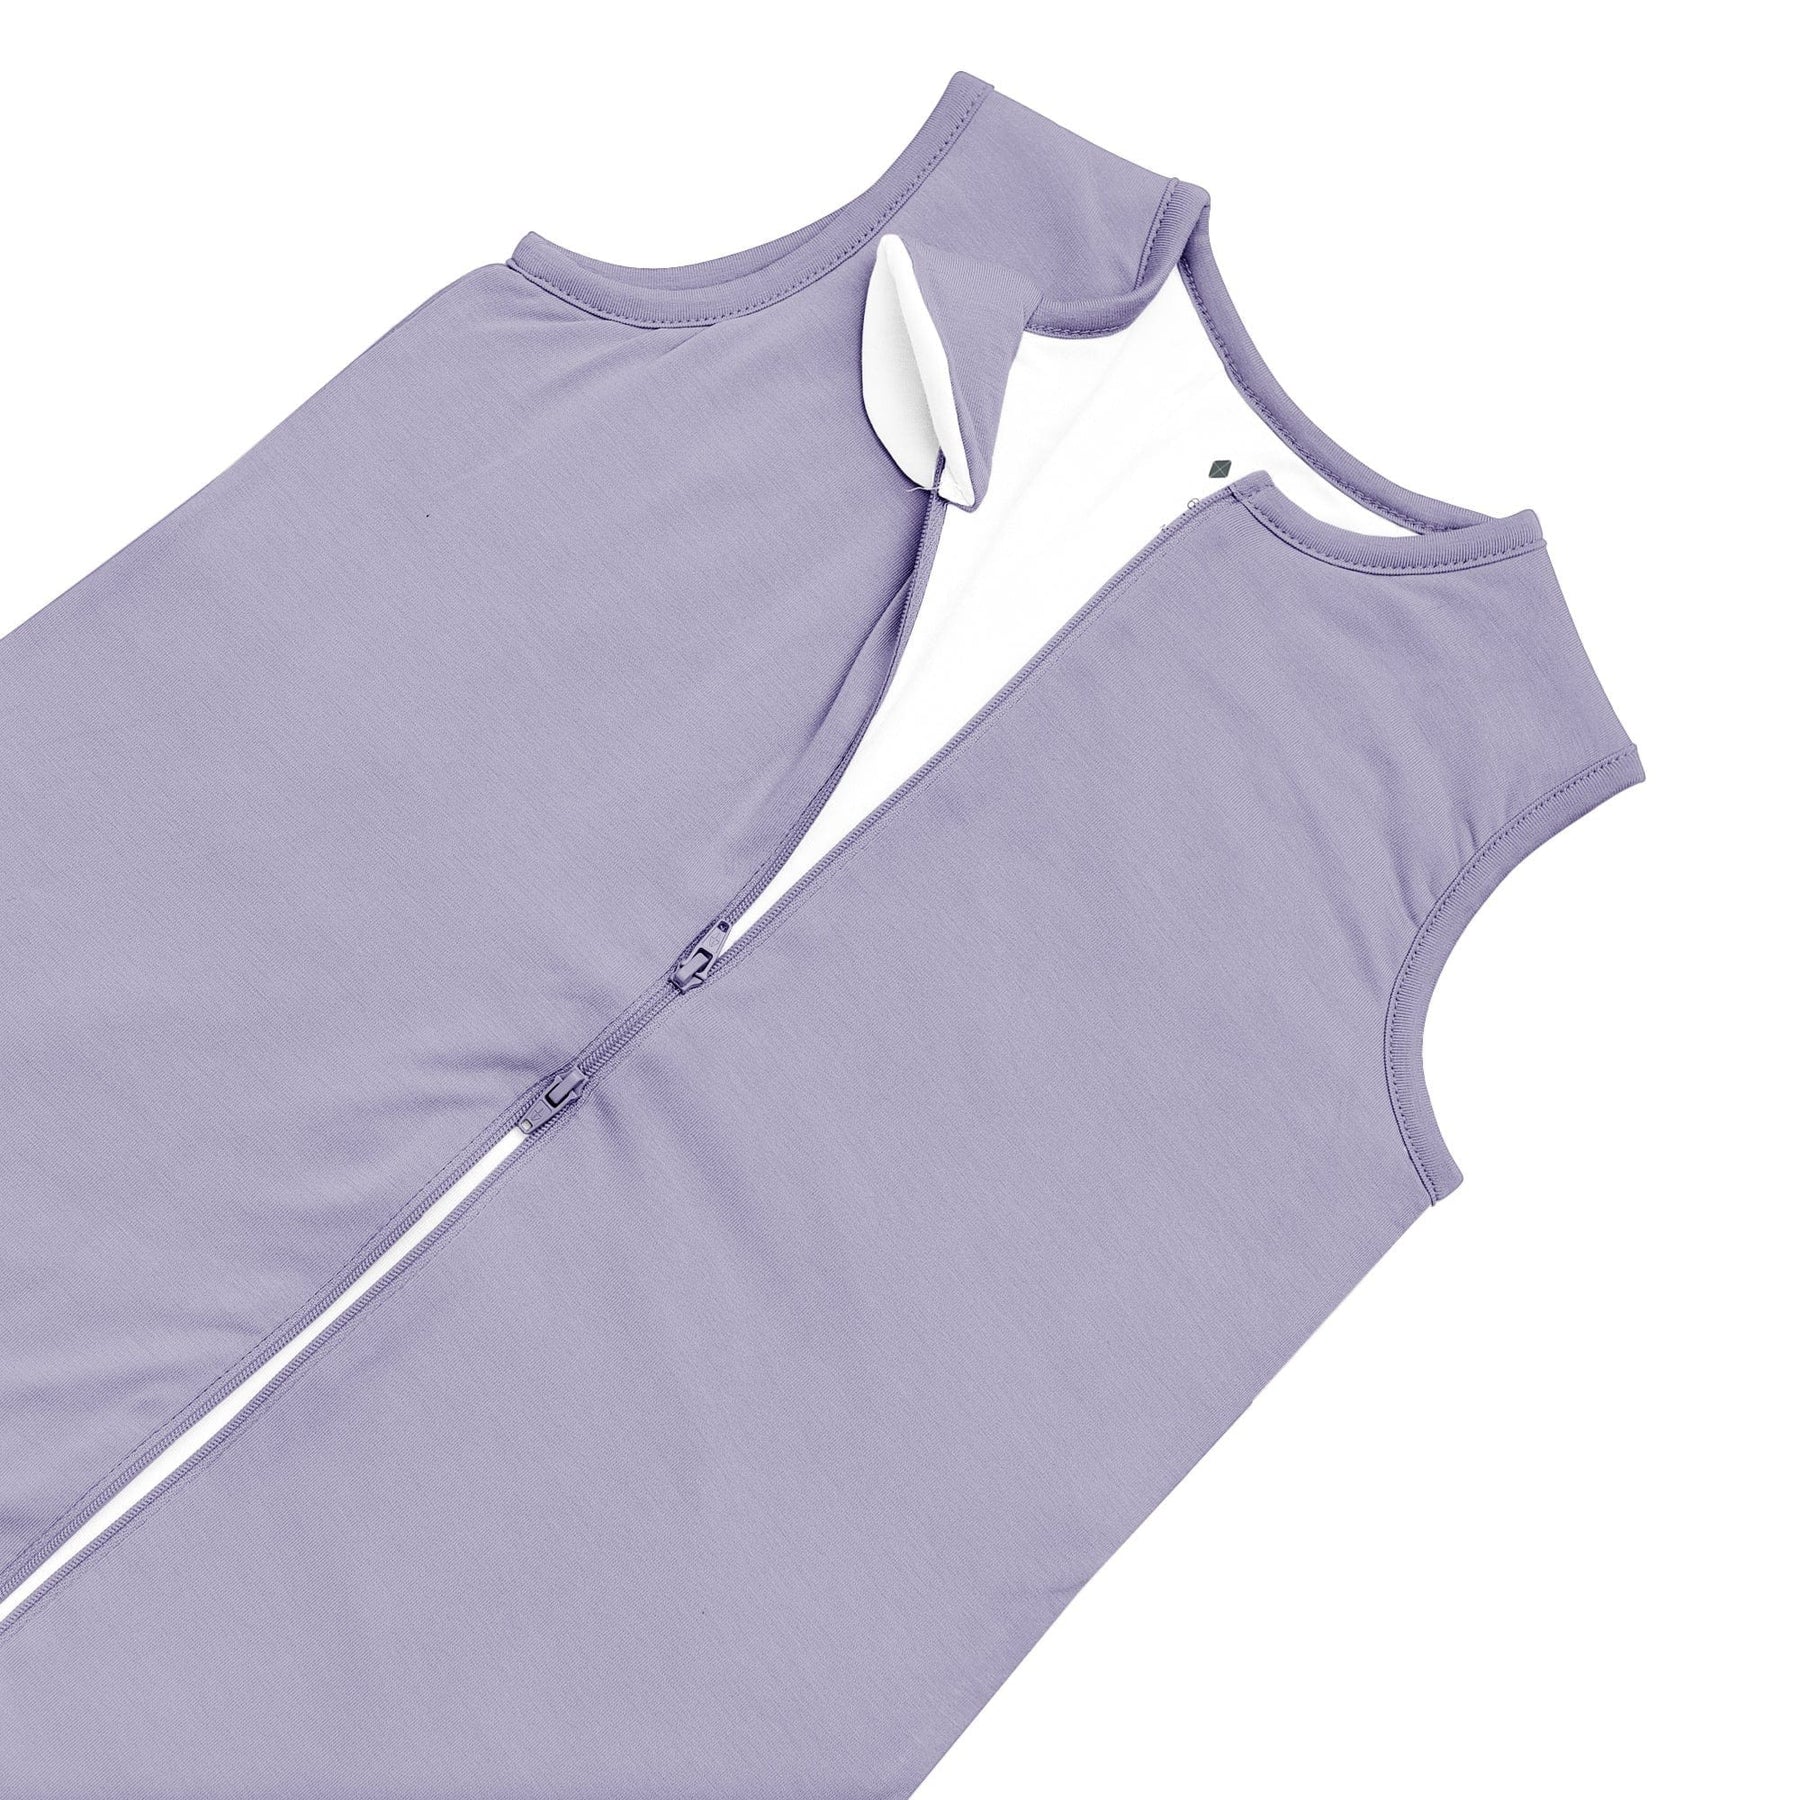 Dual zipper on Kyte Baby Sleep Bag Walker in Taro 1.0